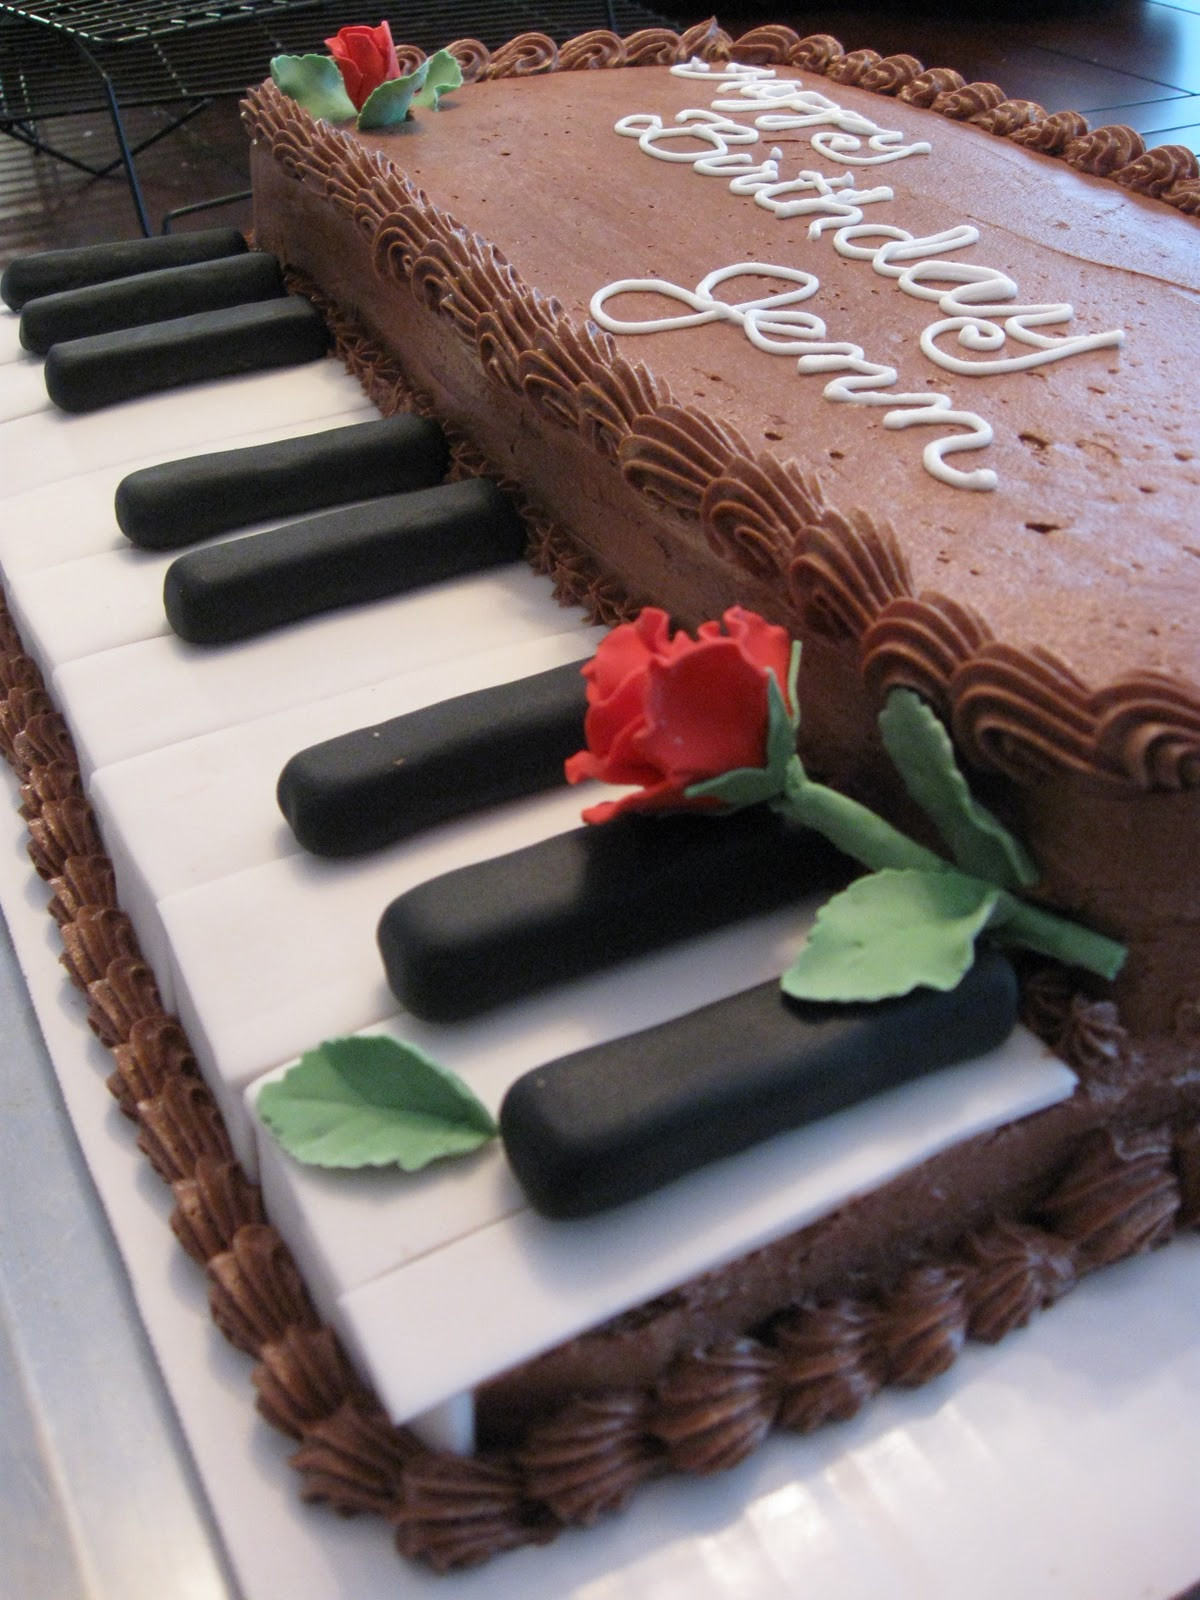 Piano Birthday Cake
 Baking Journey Making a Piano Keyboard Cake